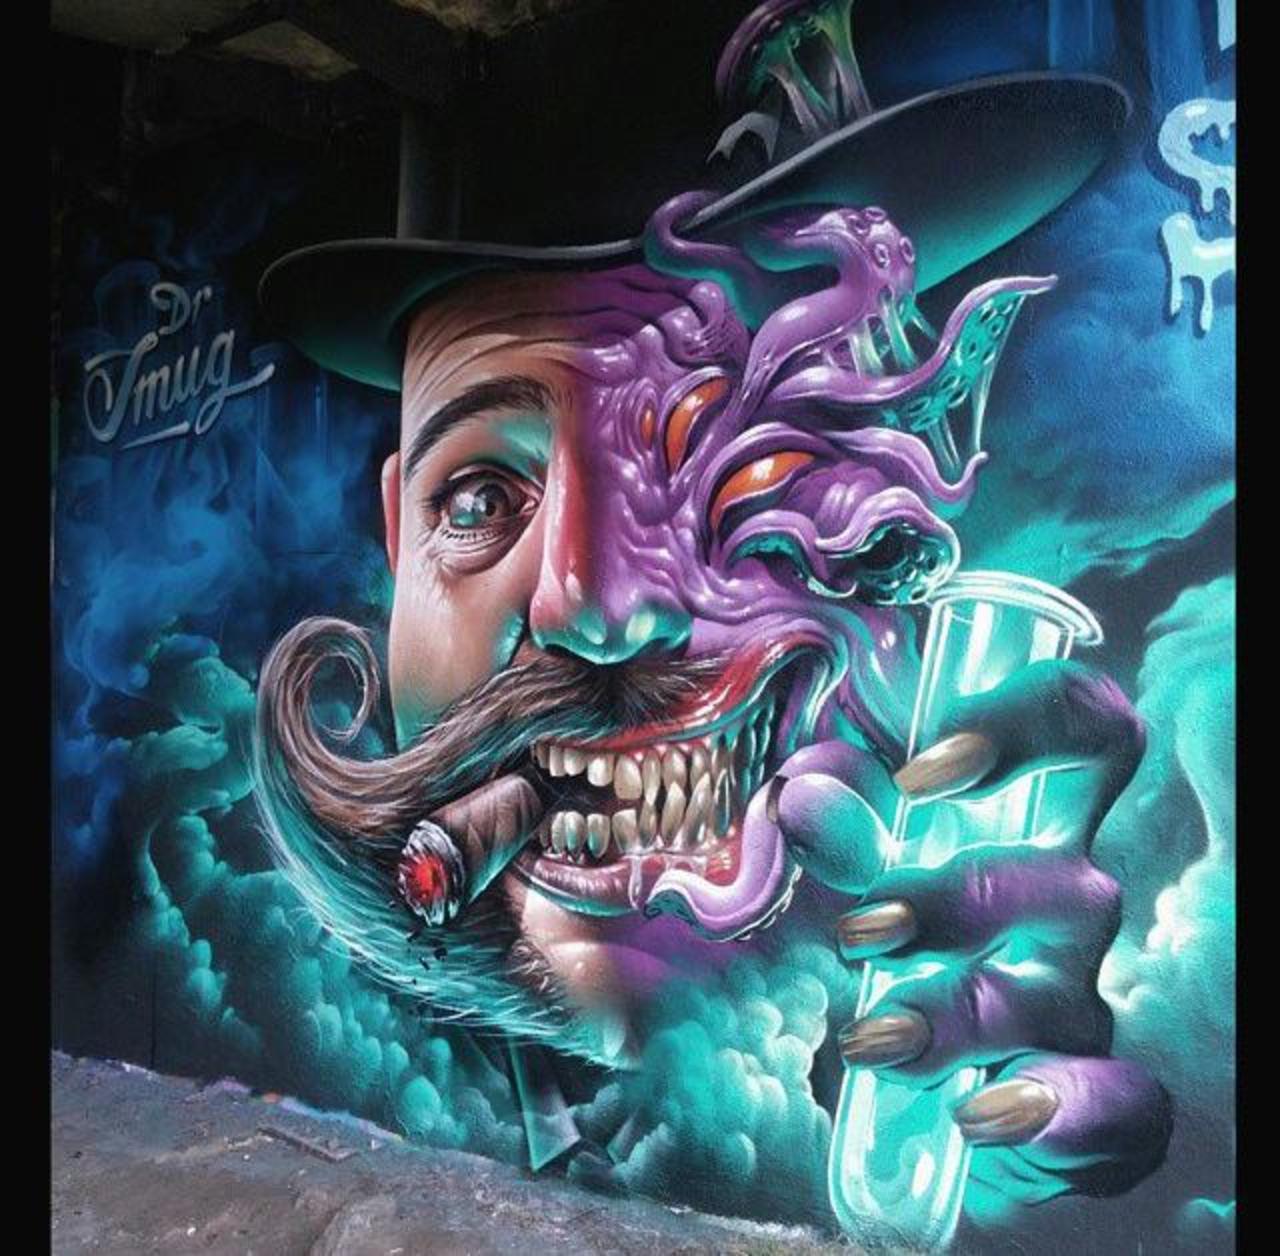 New Street Art piece by Smug & Saturno in Glasgow 

#art #arte #graffiti #streetart http://t.co/3K0iasS6yi